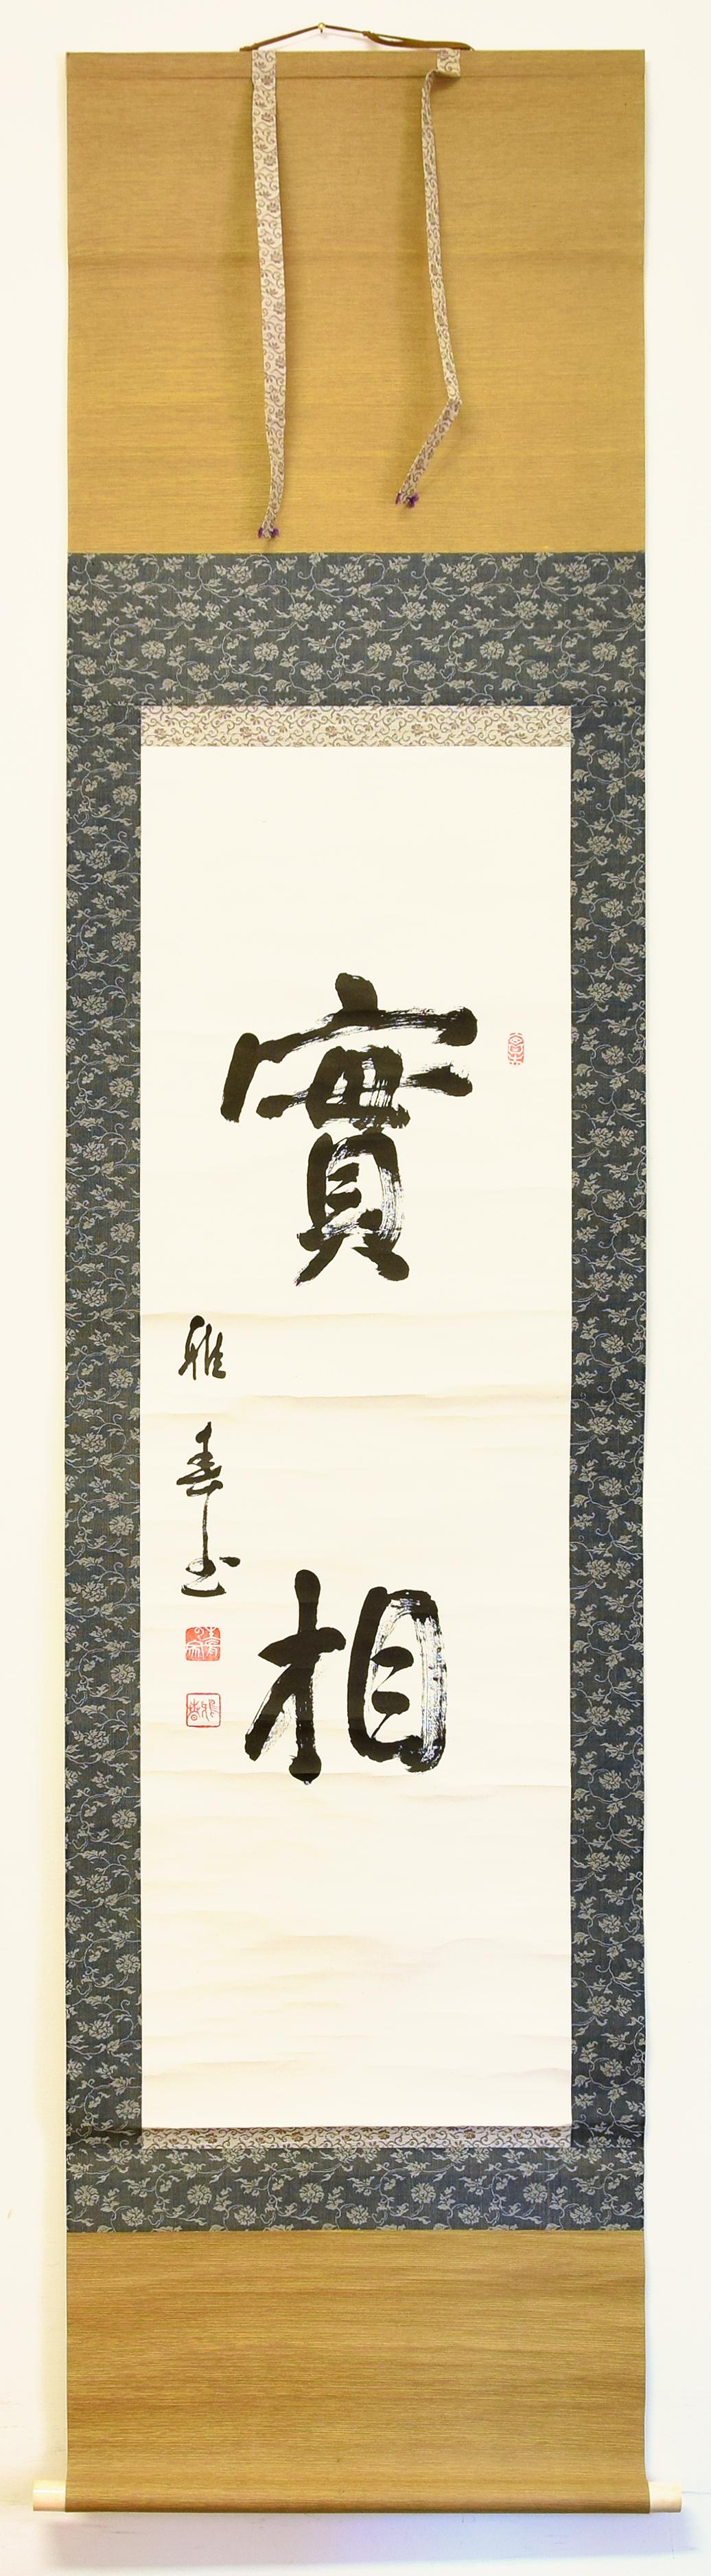 Bao Xiang: Chinese Artistic Calligraphy by Ya Chun - Early 20th Century